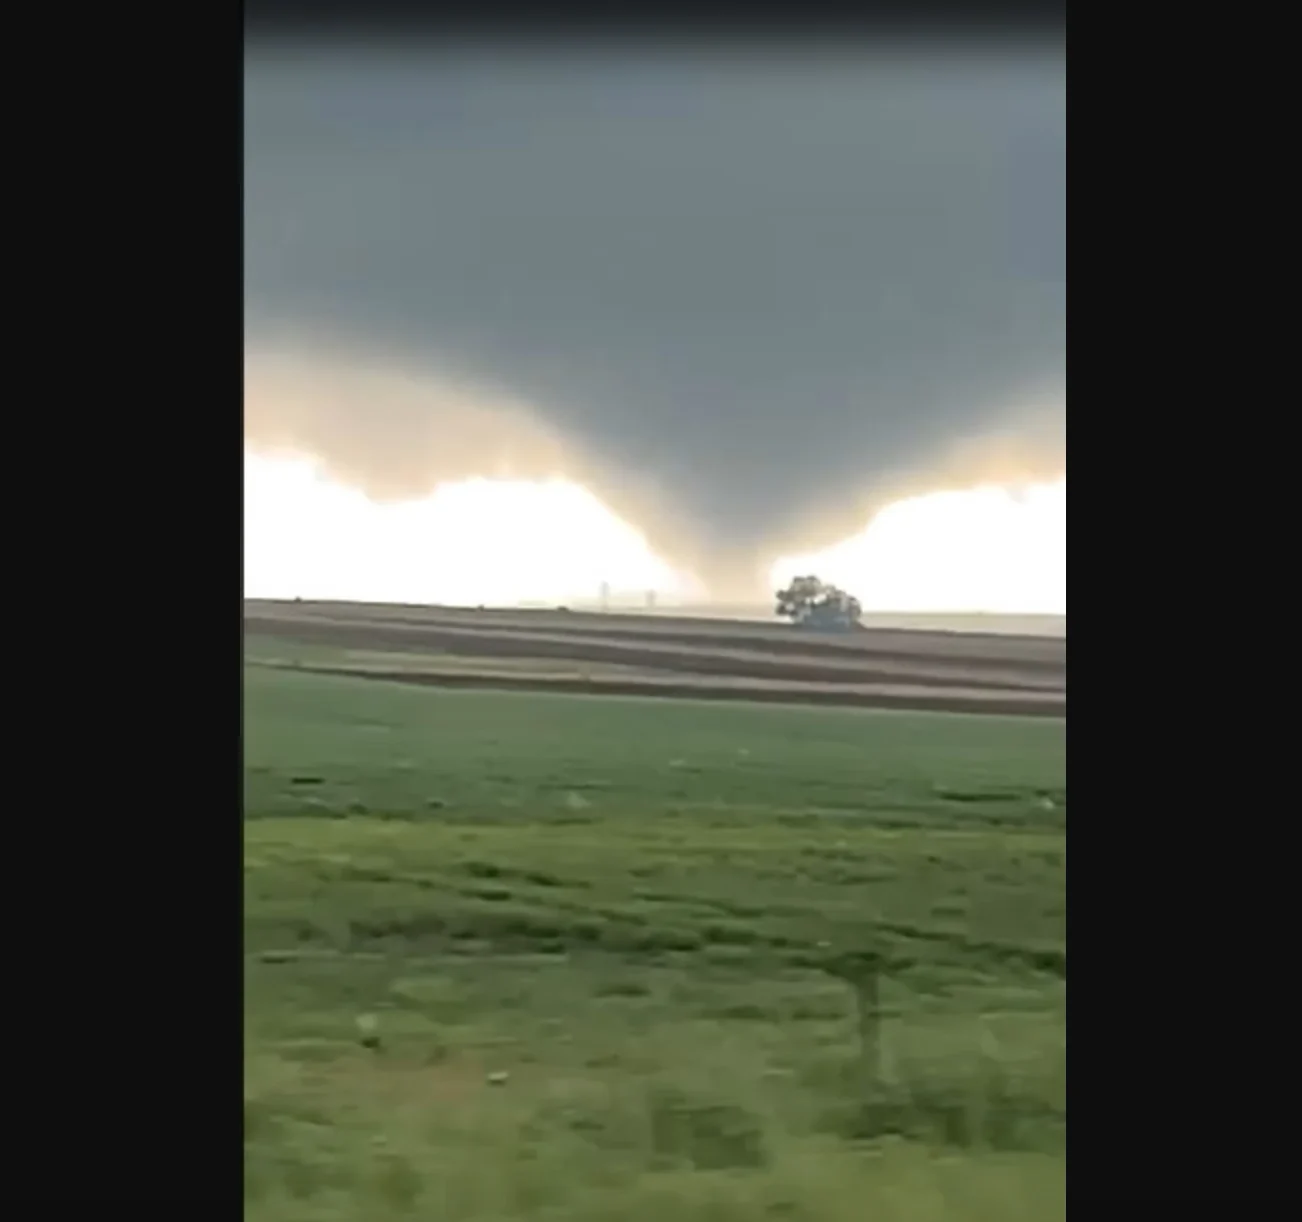 Screenshot from Facebook video by Sean and Kathy Lesnar/Facebook. South Dakota Tornado